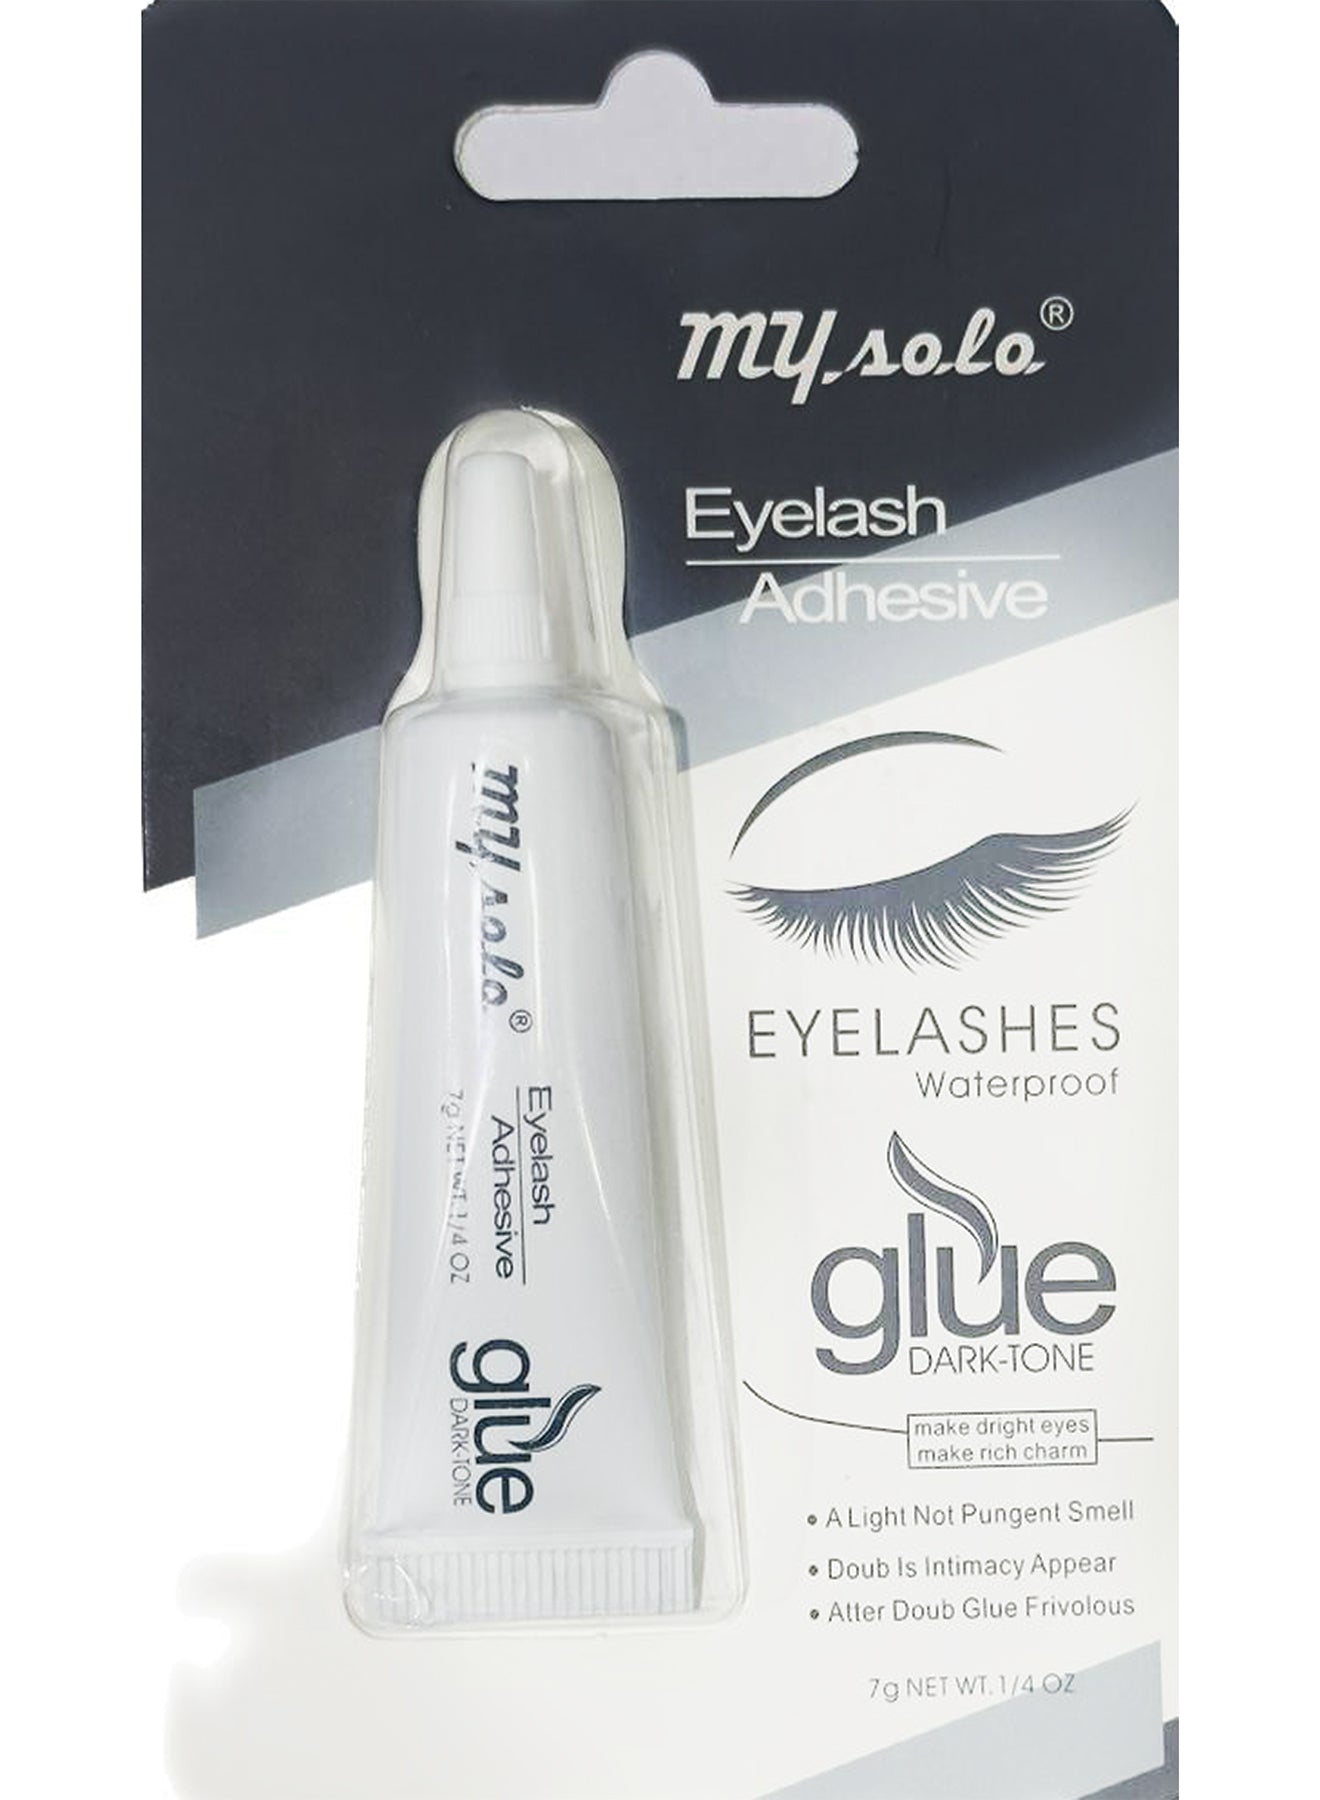 Mysolo Eyelash Adhesive Glue DarkTone 7g Value Pack of 3 